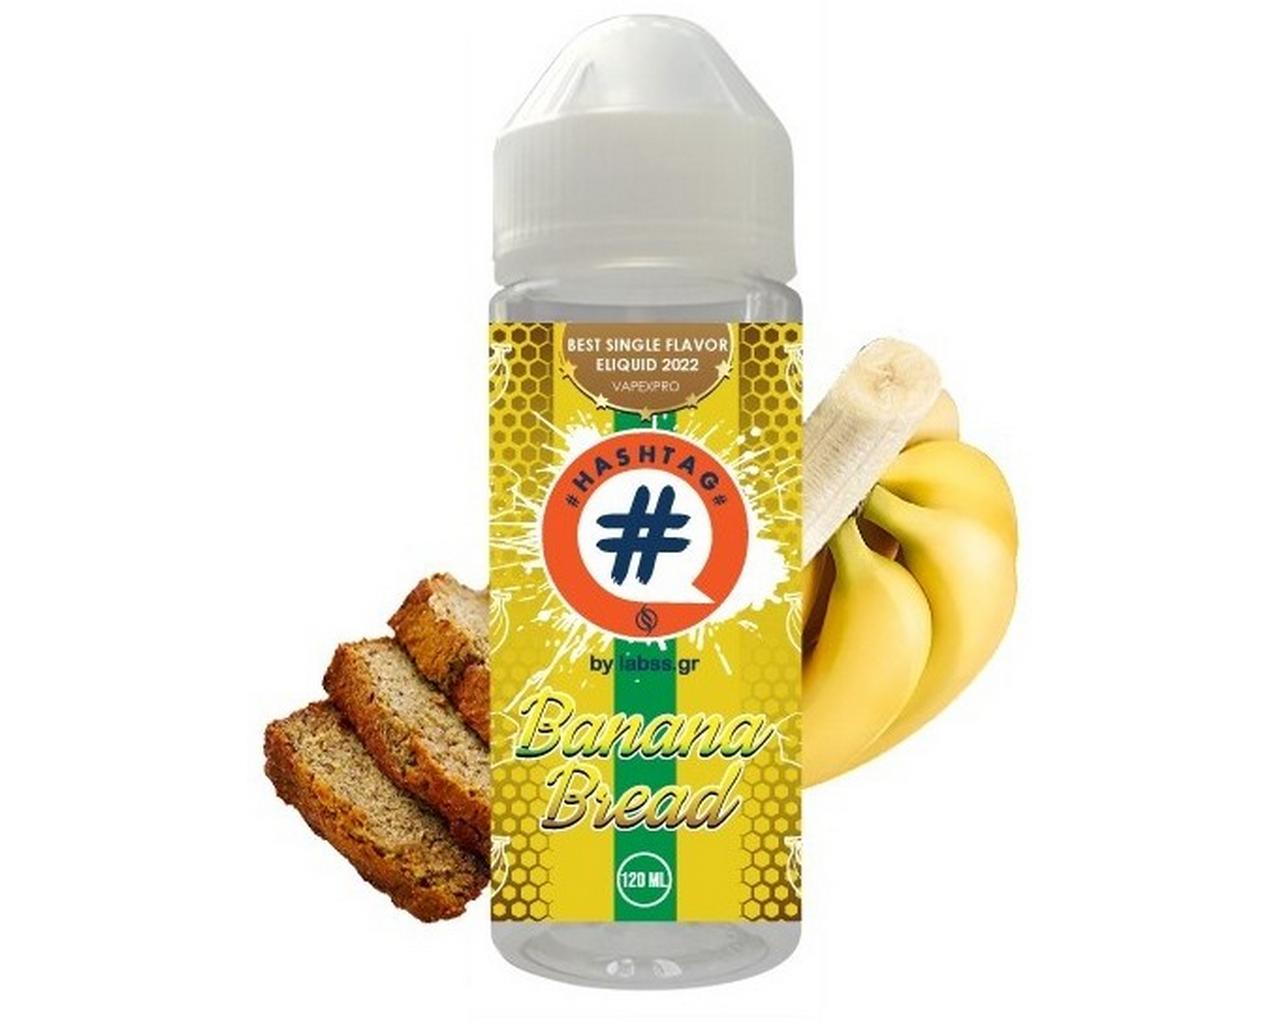 Hashtag Flavorshot Banana Bread